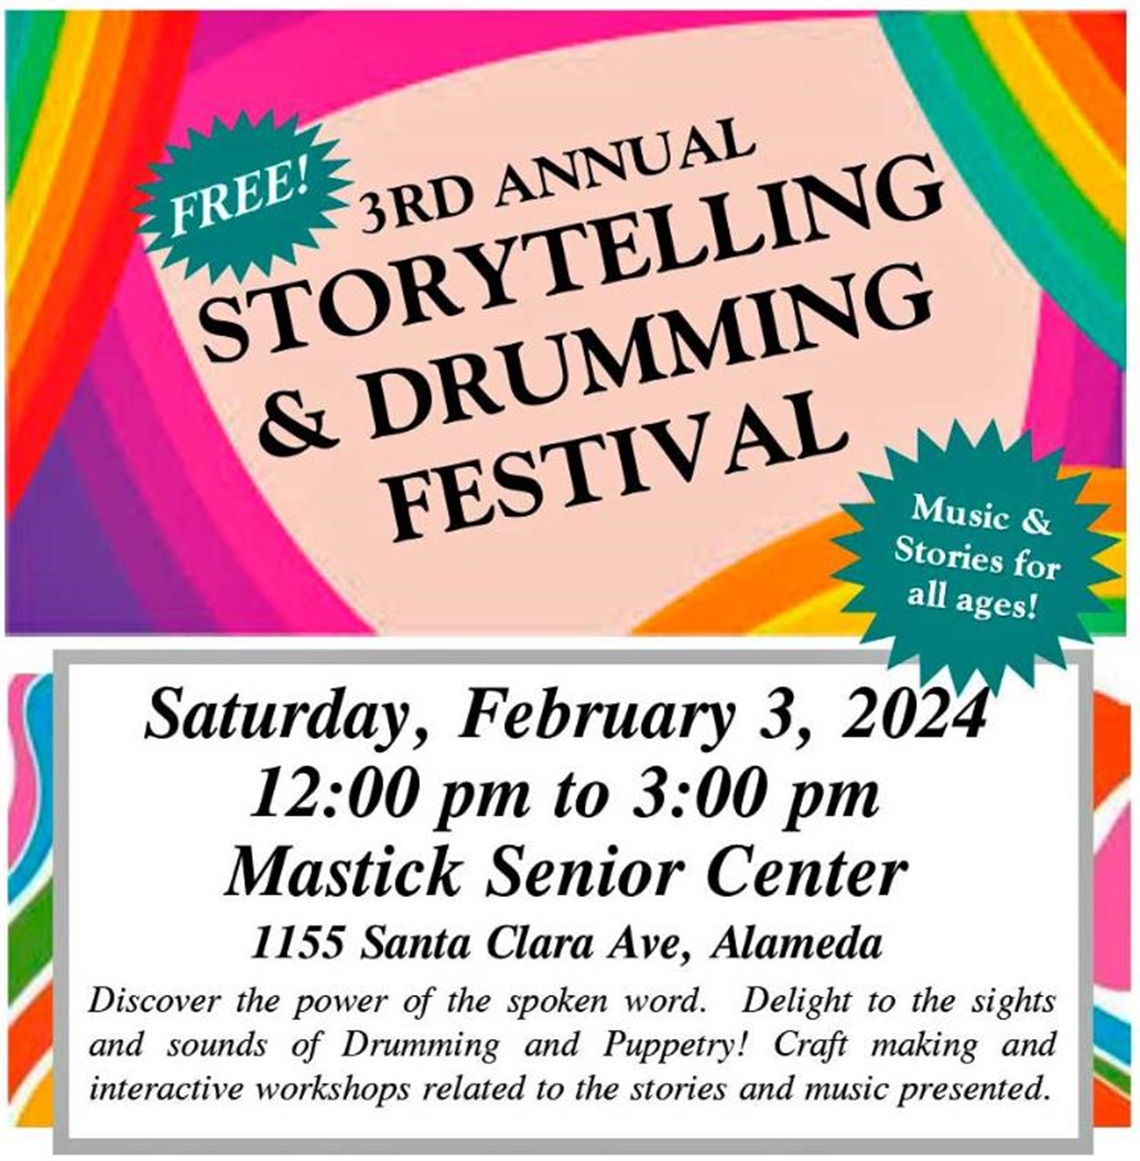 2023 Storytelling & Drumming Festival Splash